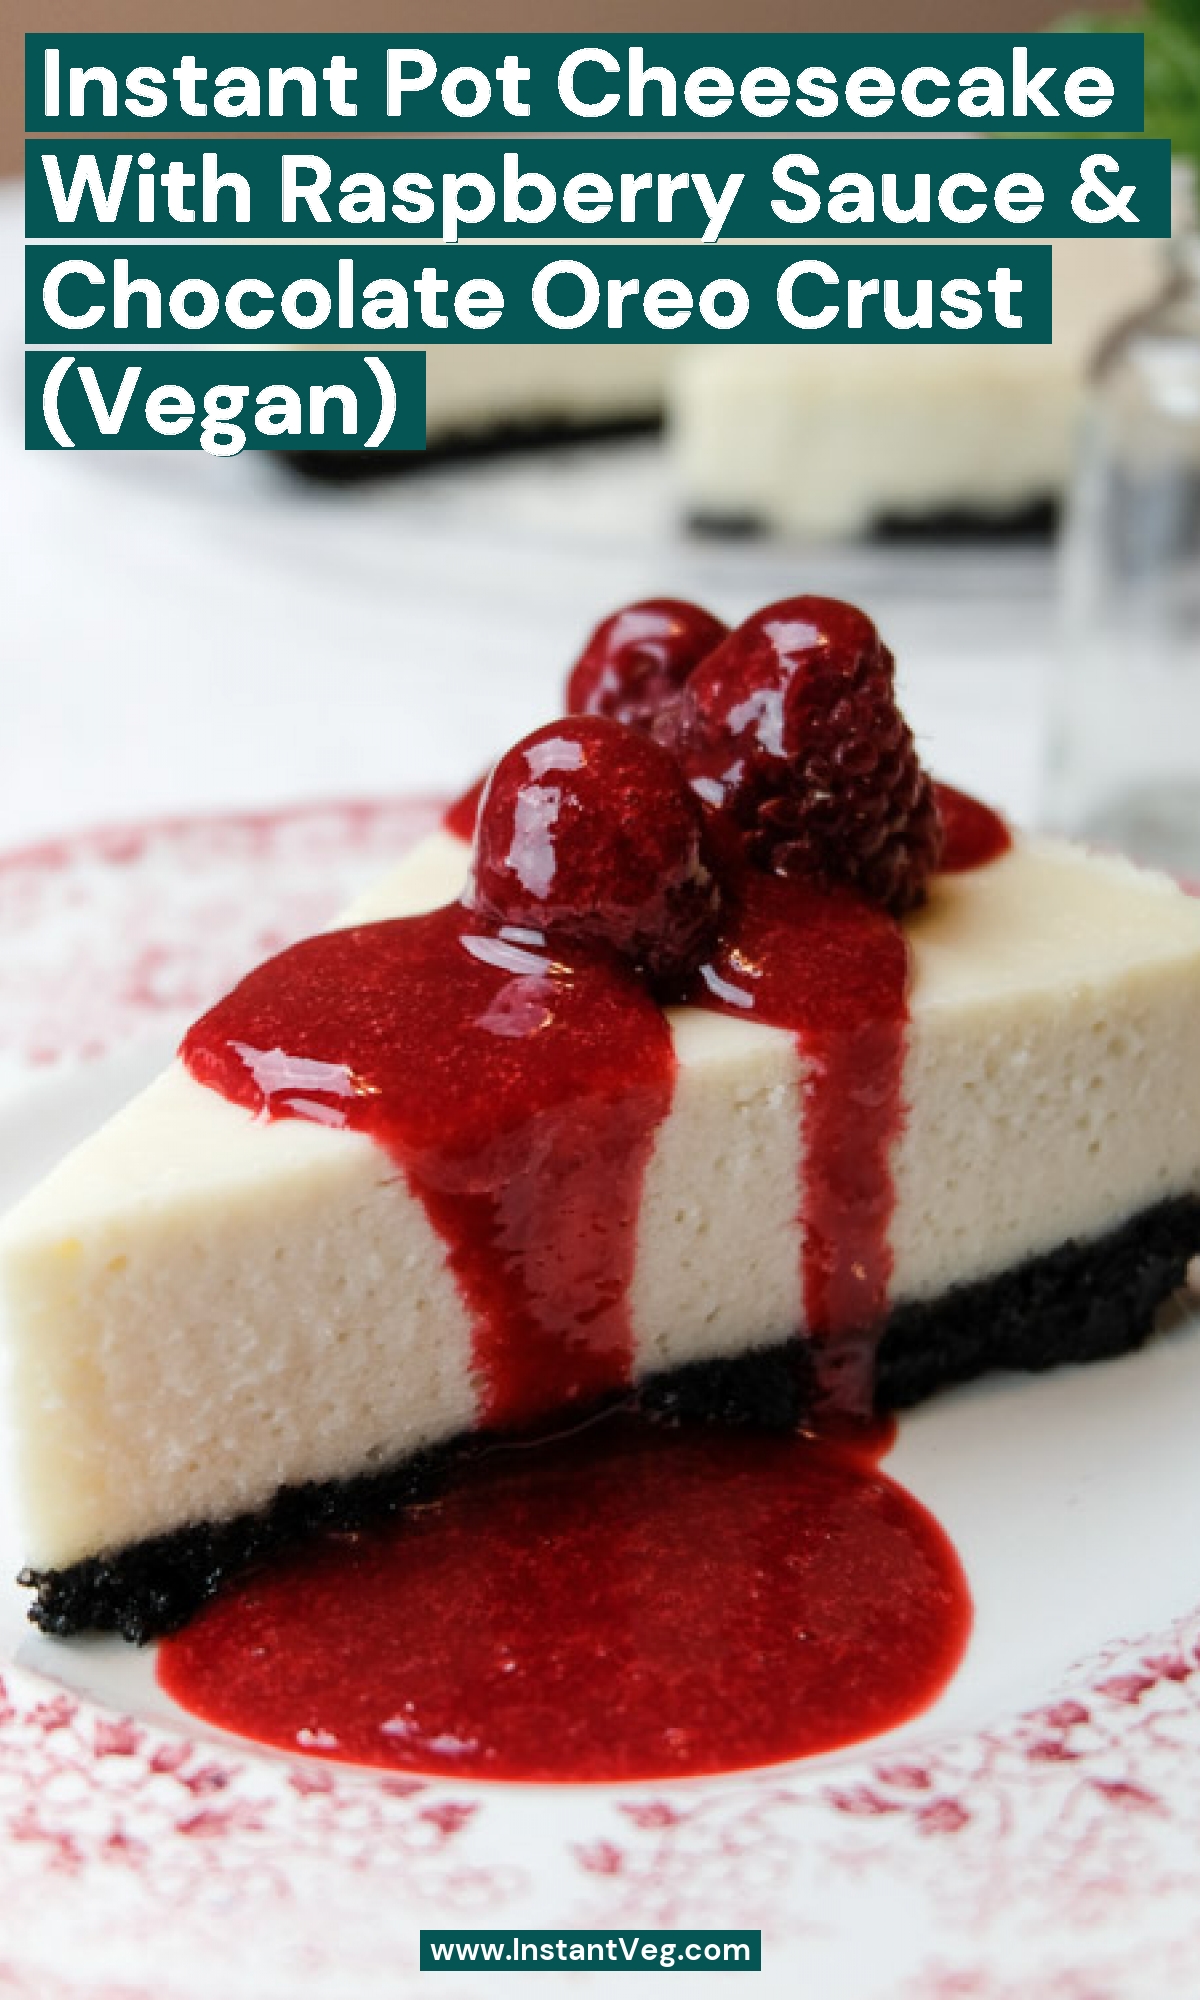 Instant Pot Cheesecake with Raspberry Sauce & Chocolate Oreo Crust (Vegan)